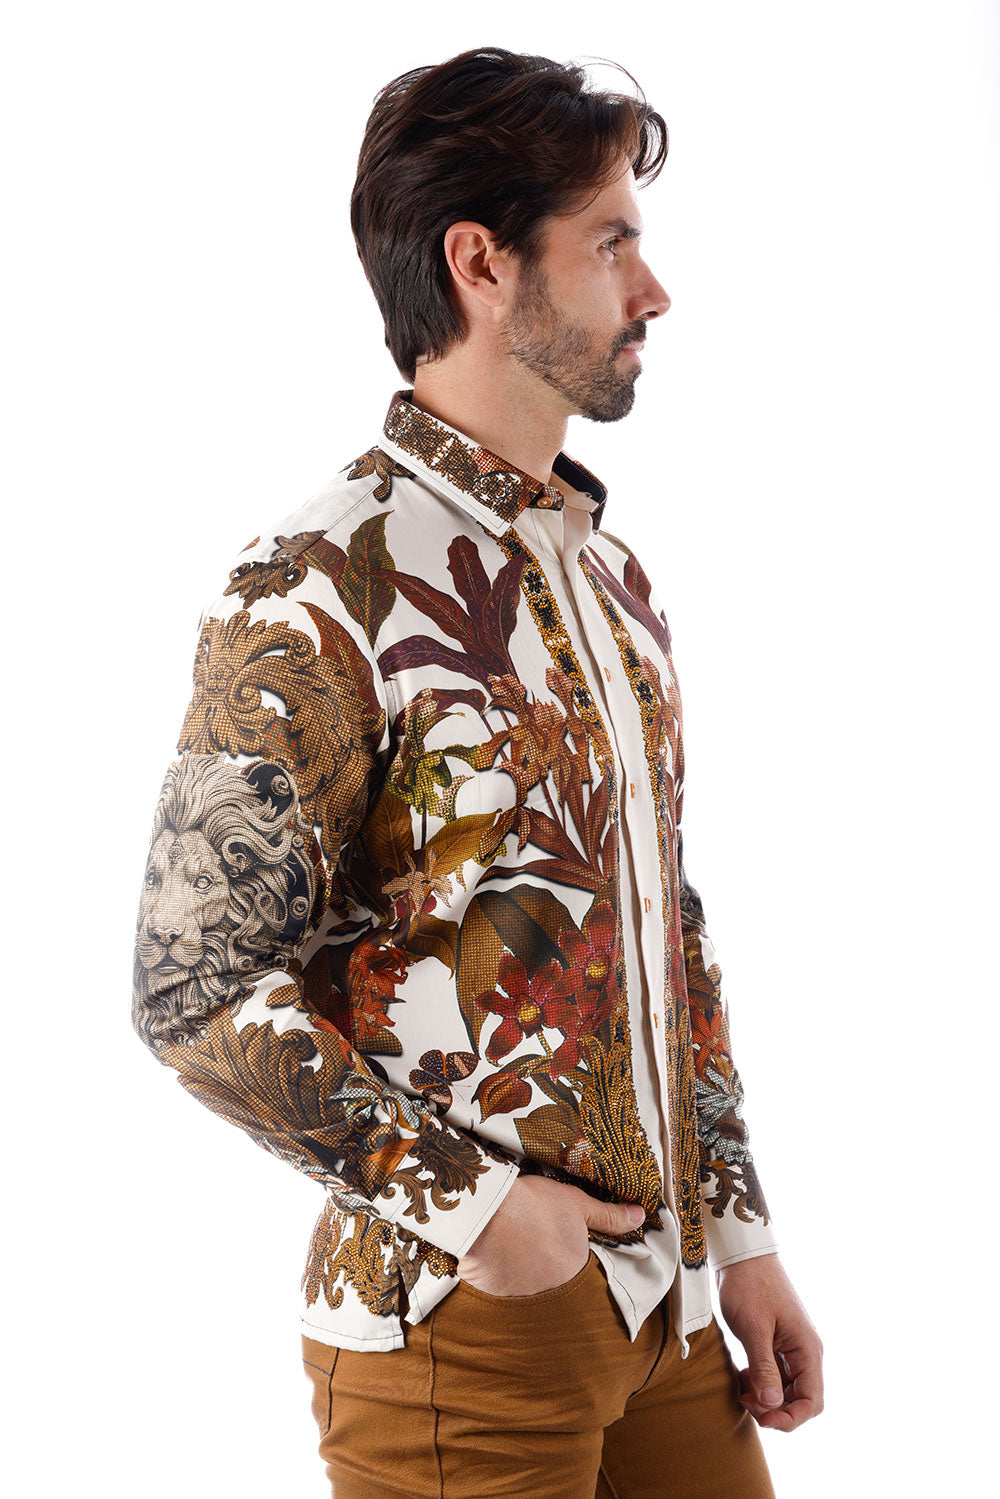 BARABAS Men's Rhinestone Floral Lion Long Sleeve Shirts 3SPR428 Cream